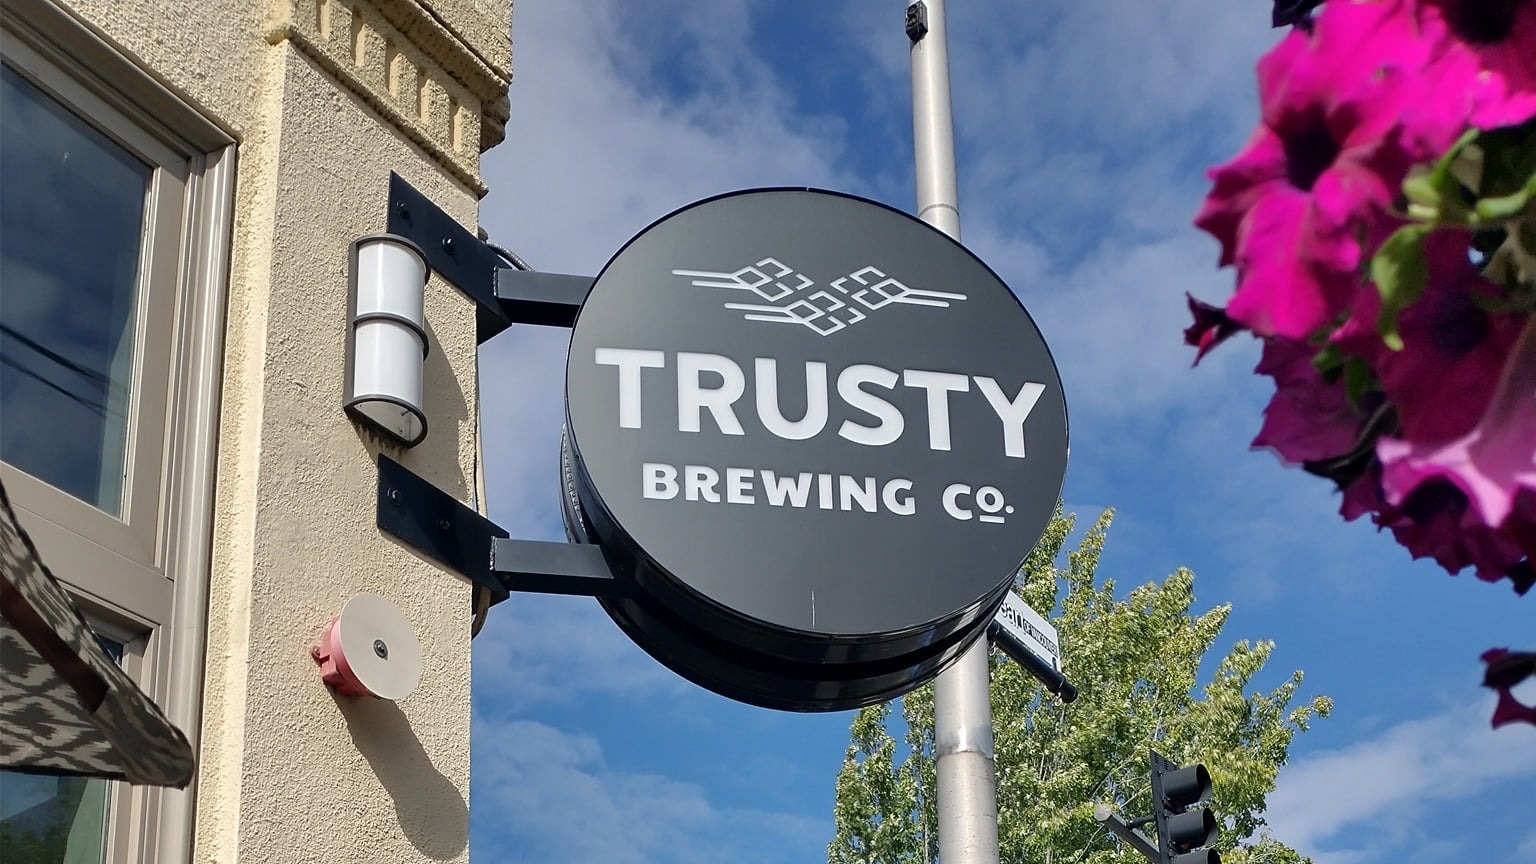 Trusty Brewing Co.